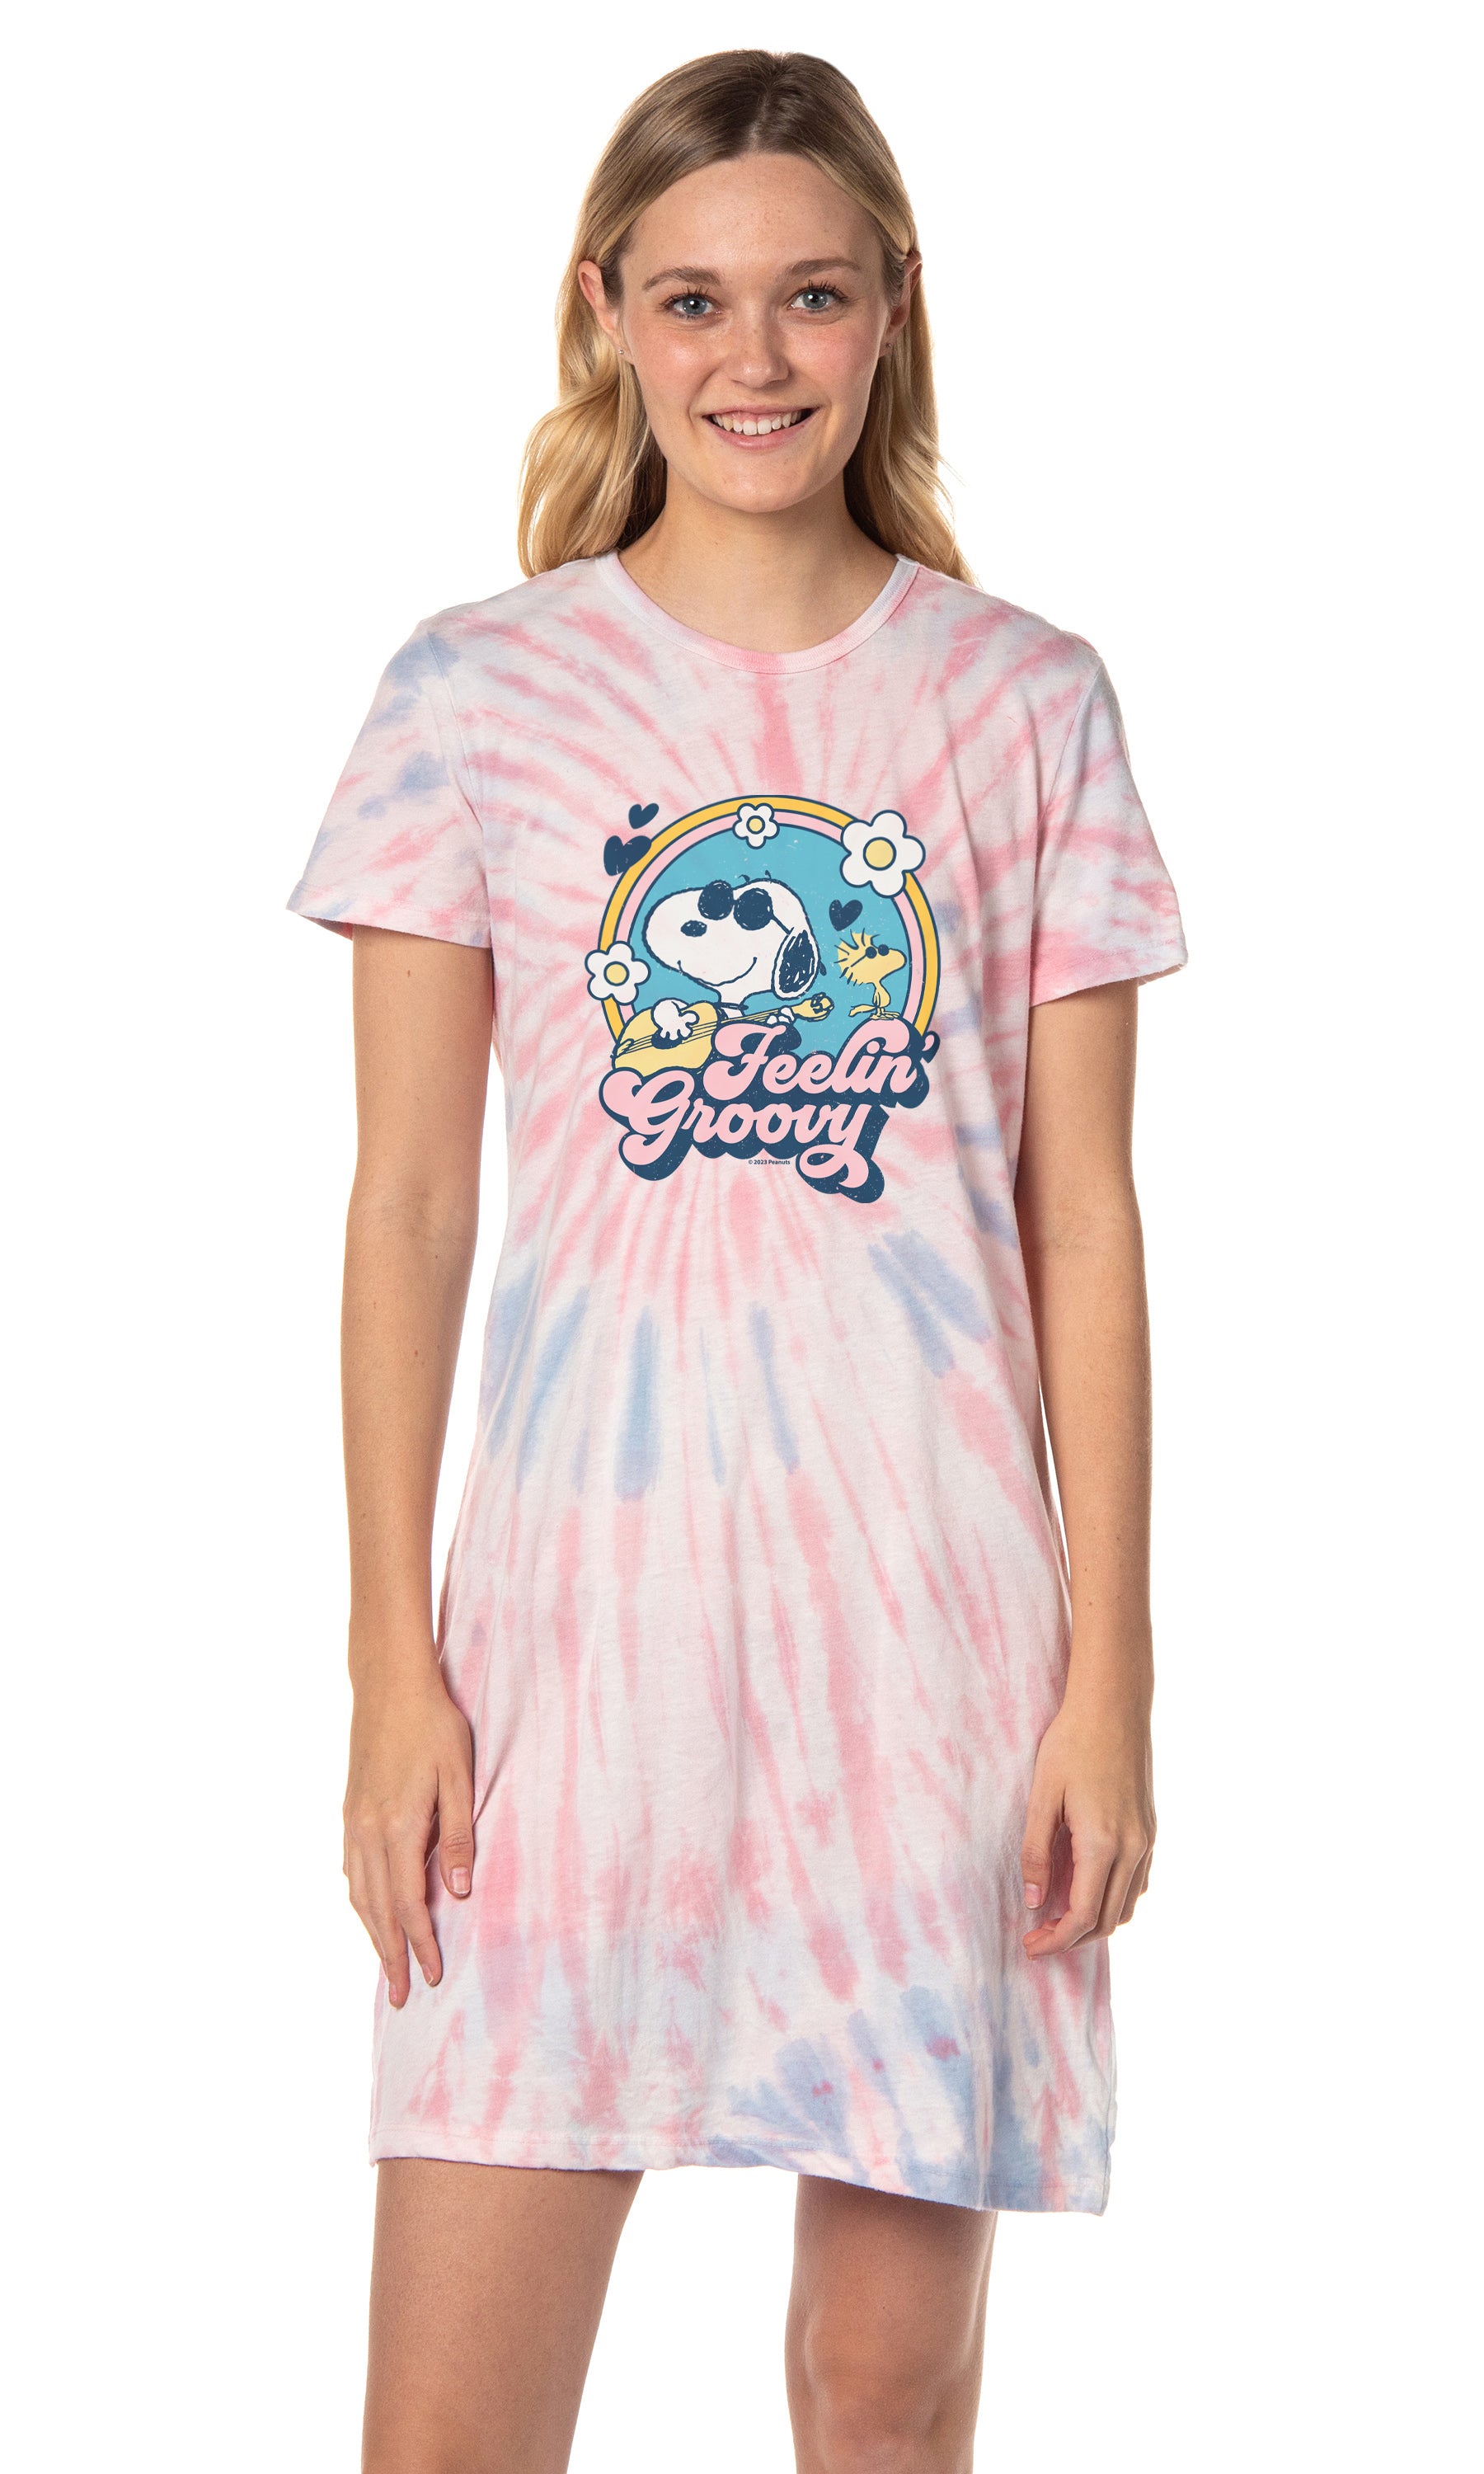 Peanuts Women\'s PJammy Pajama – Nightgown Sleep Snoopy For Shirt Feelin Groovy